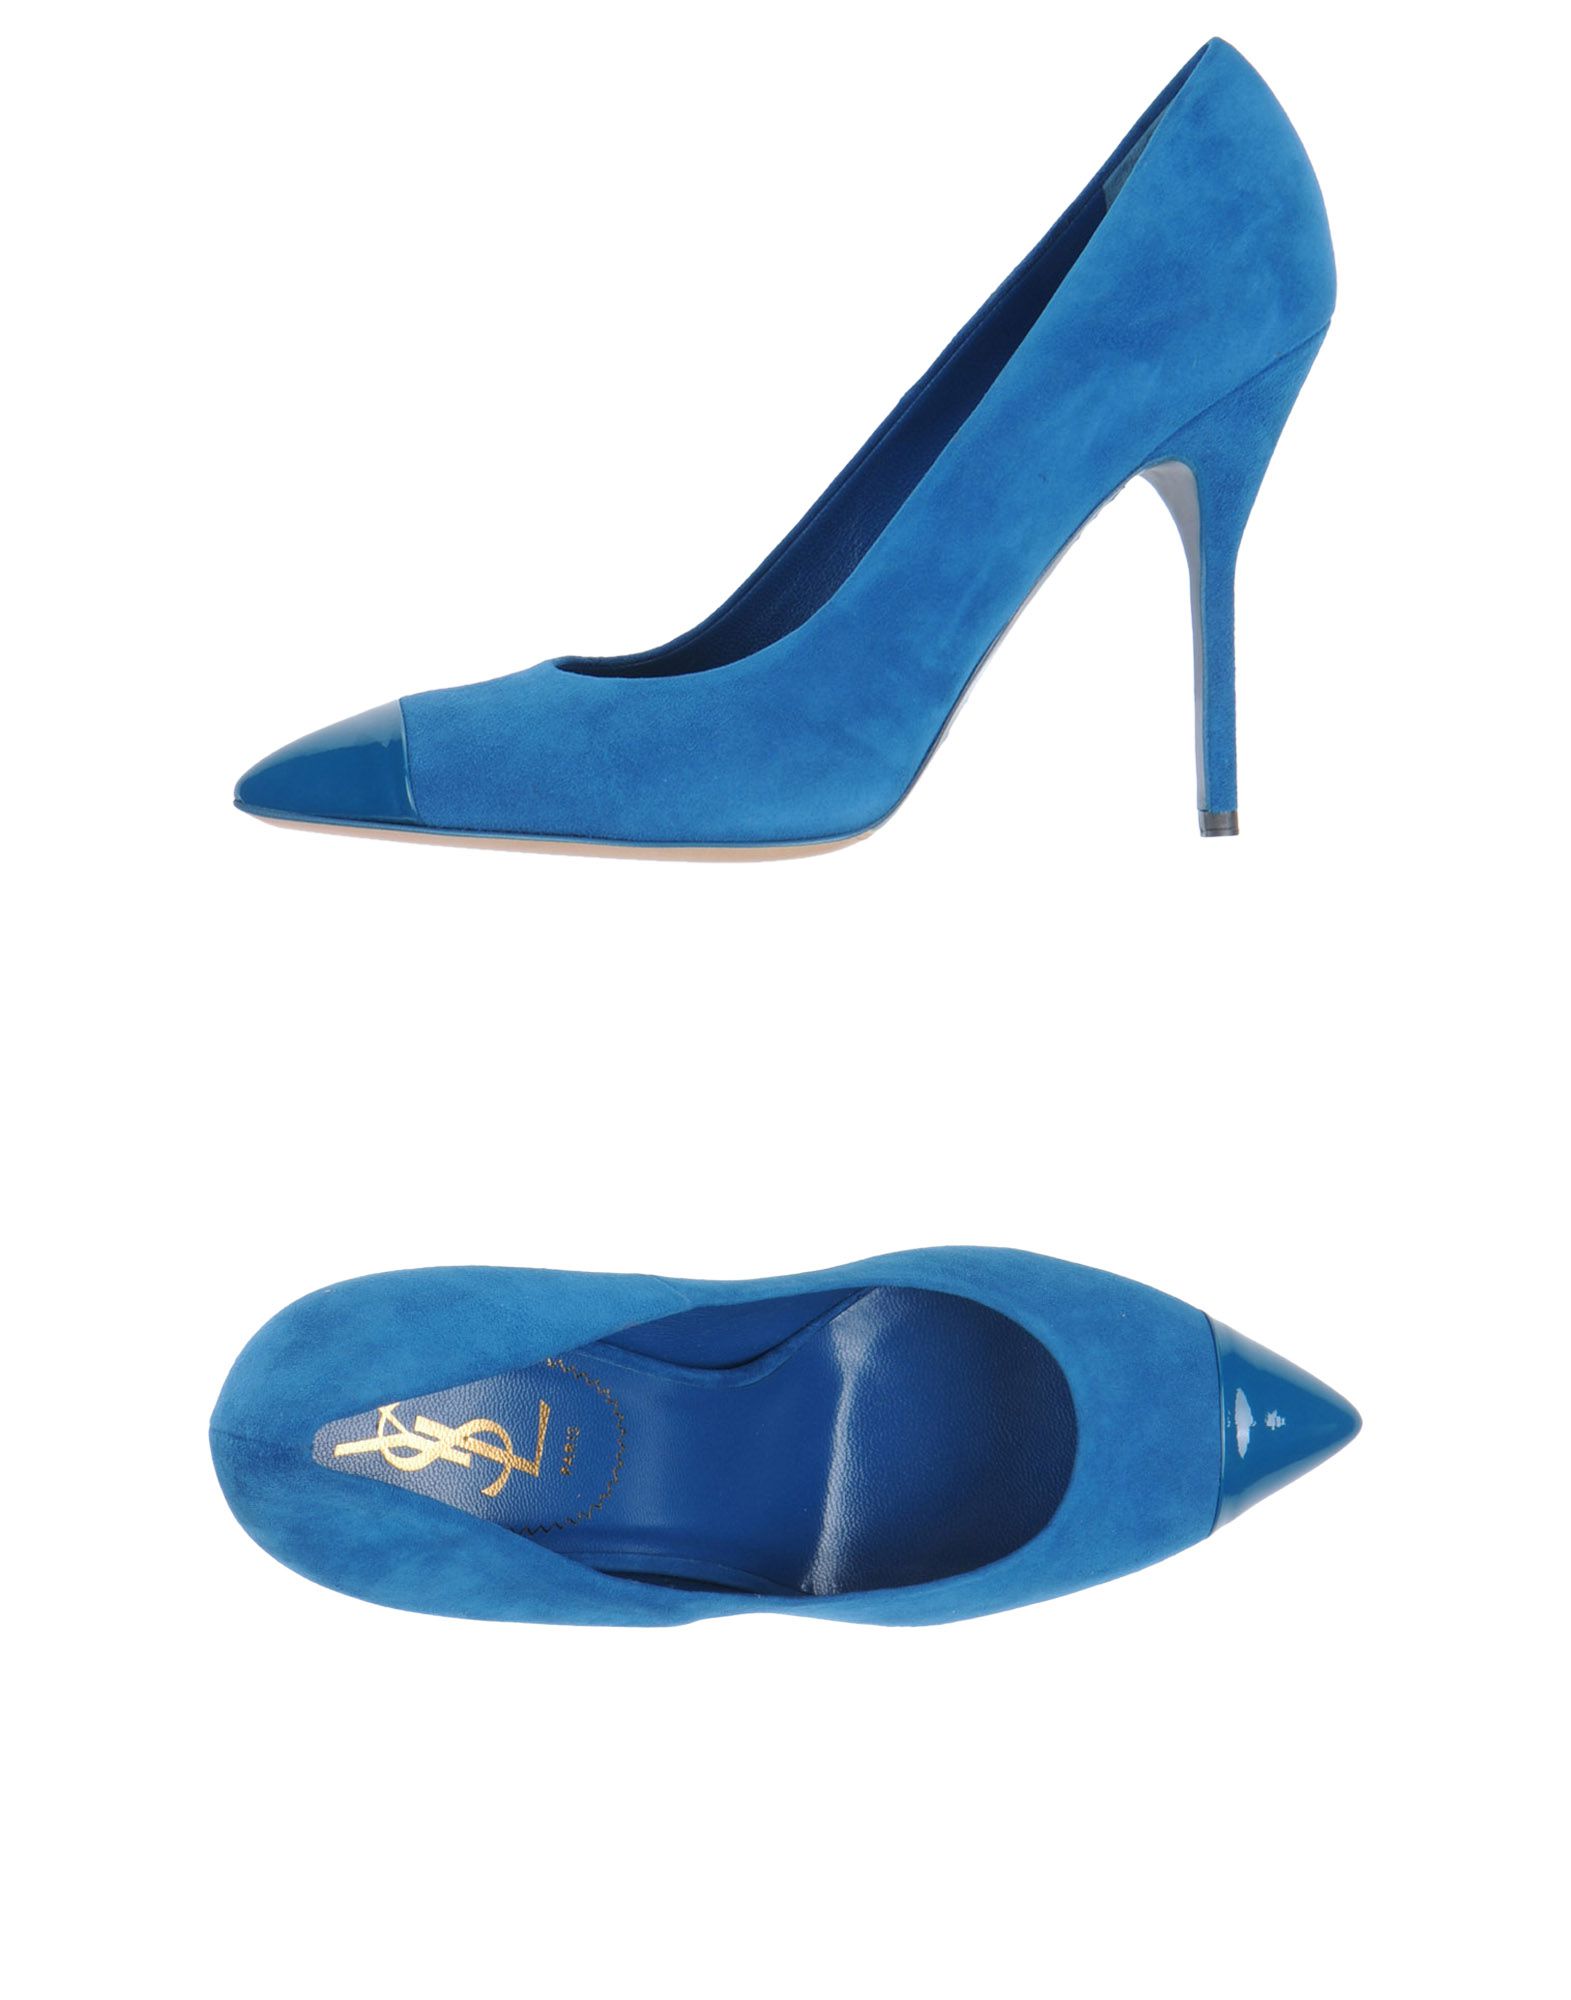 Foto Yves Saint Laurent Rive Gauche Zapatos De SalóN Mujer Azul pastel